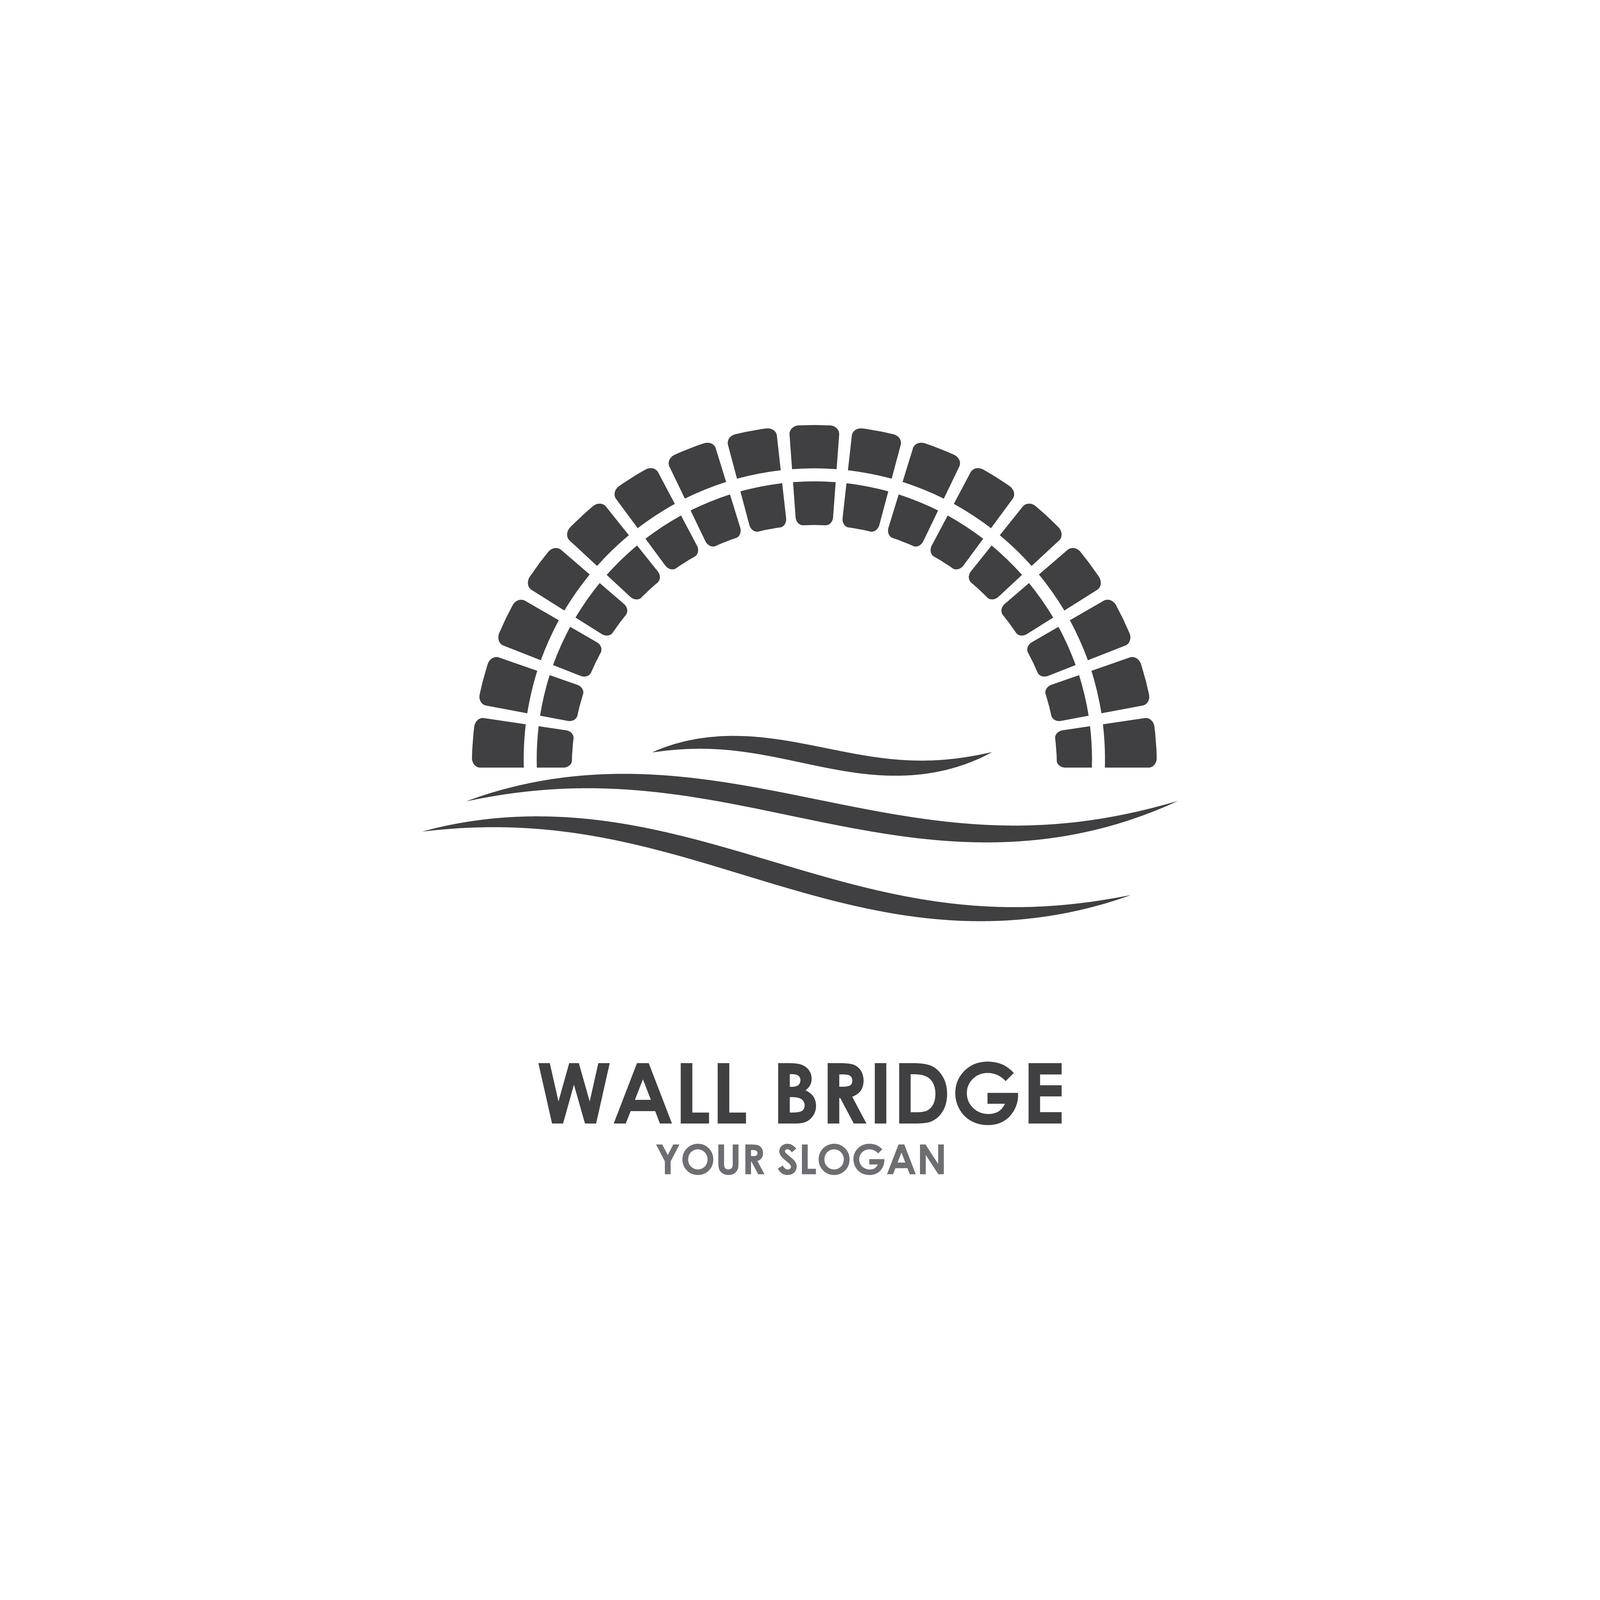 Wall bridge by awk